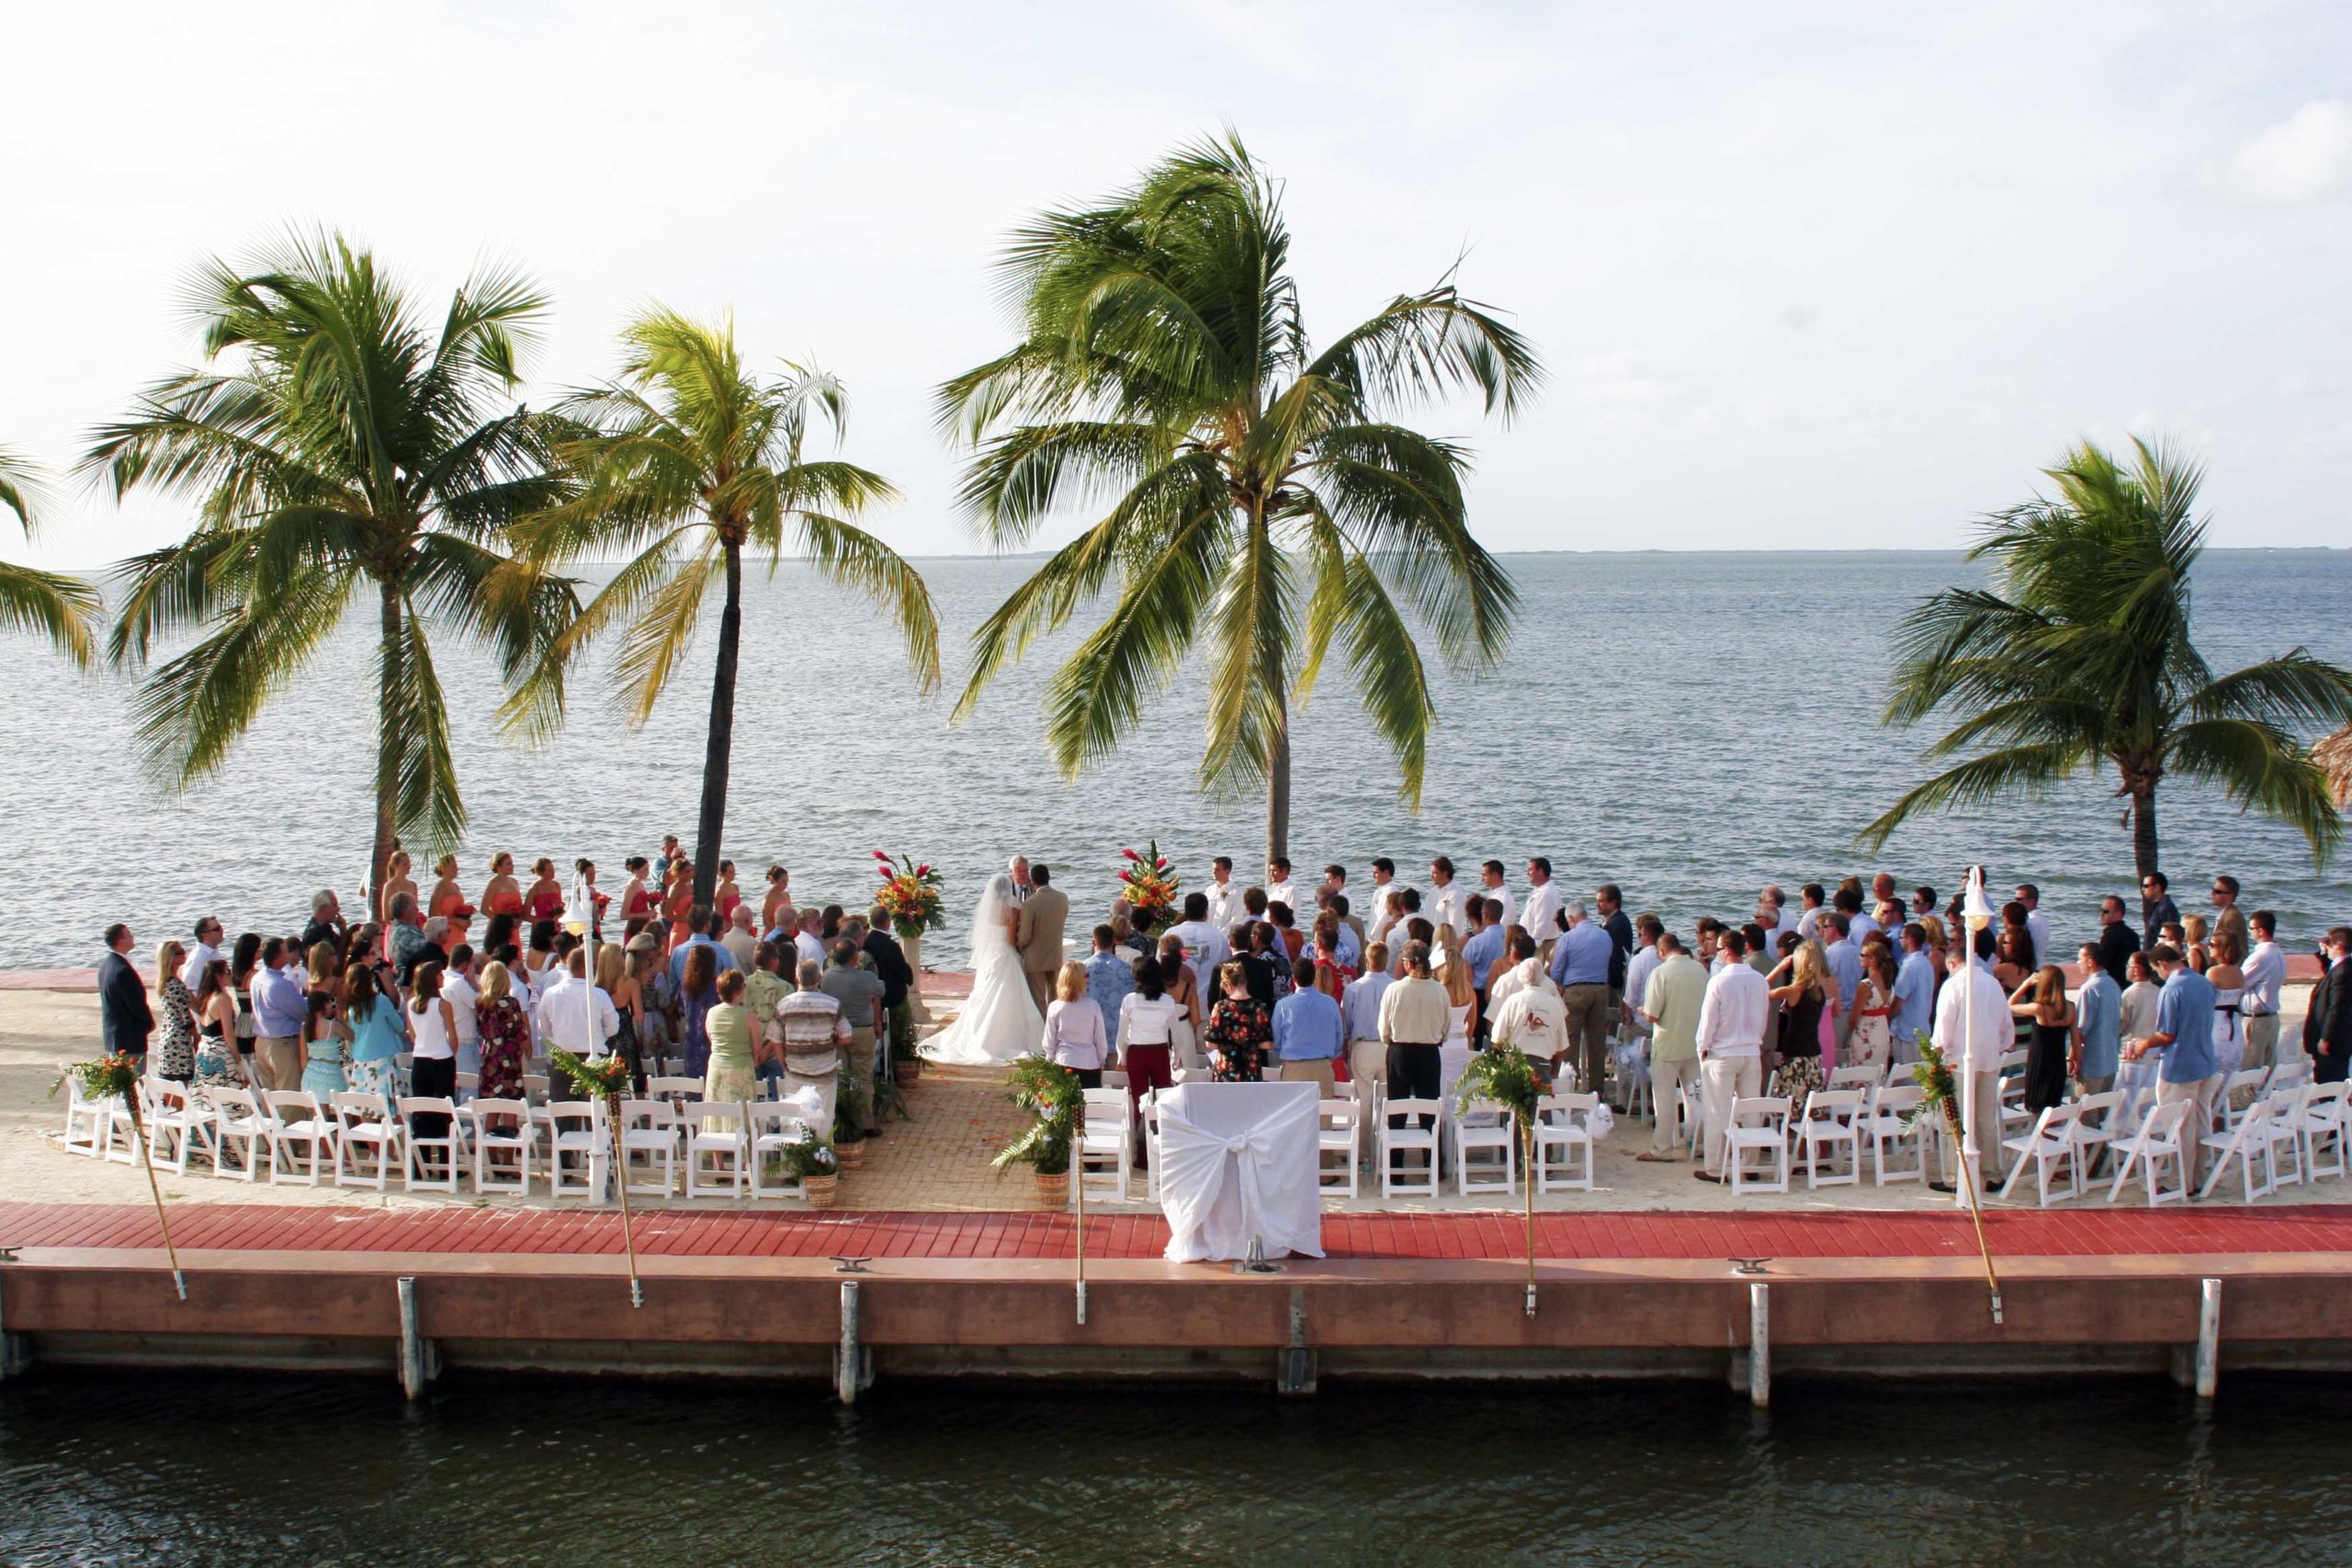 South Florida Reception Venue and Key Largo Wedding